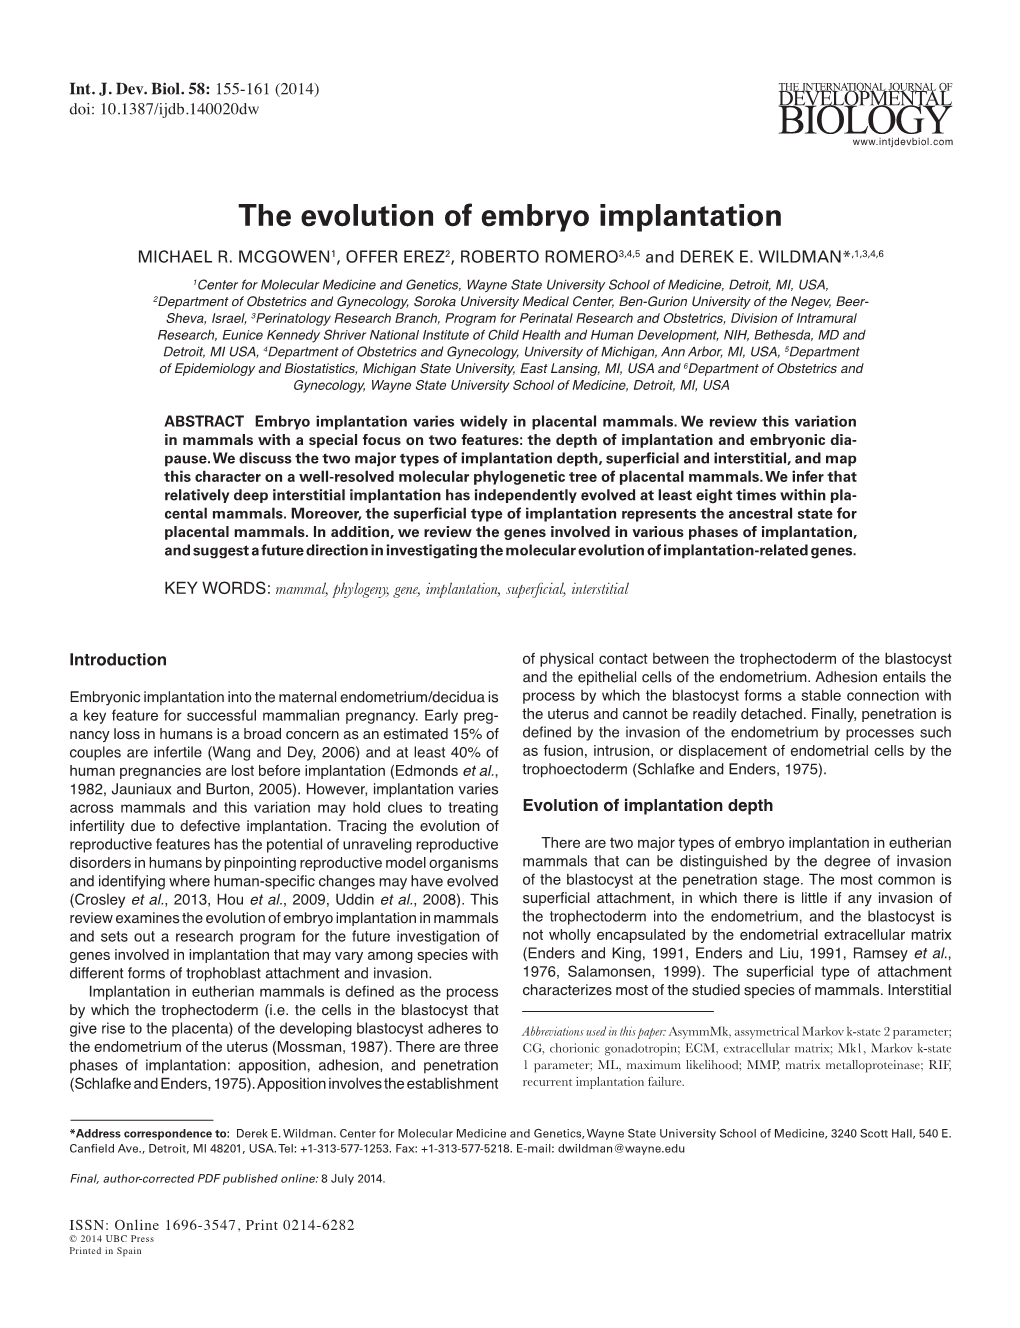 The Evolution of Embryo Implantation MICHAEL R